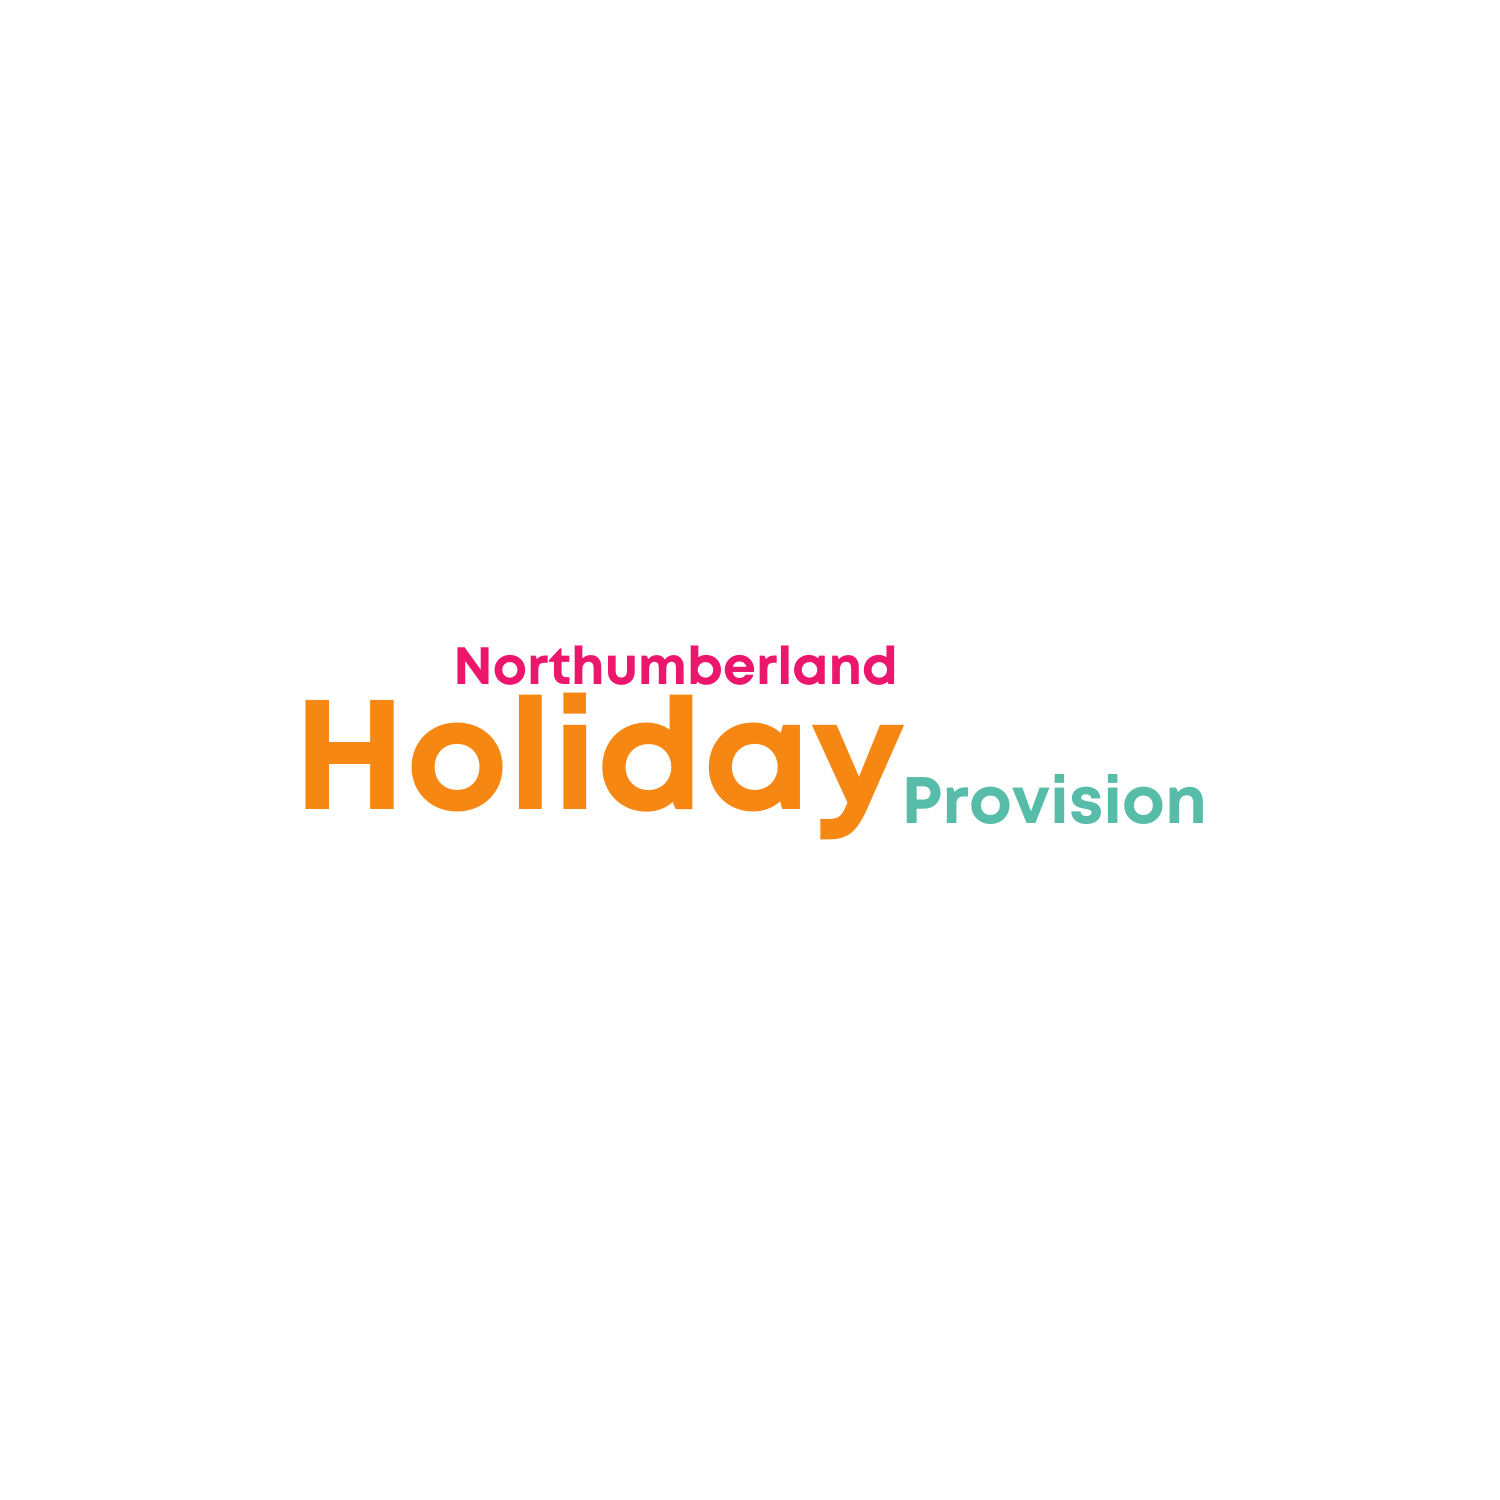 Northumberland Holiday Provision